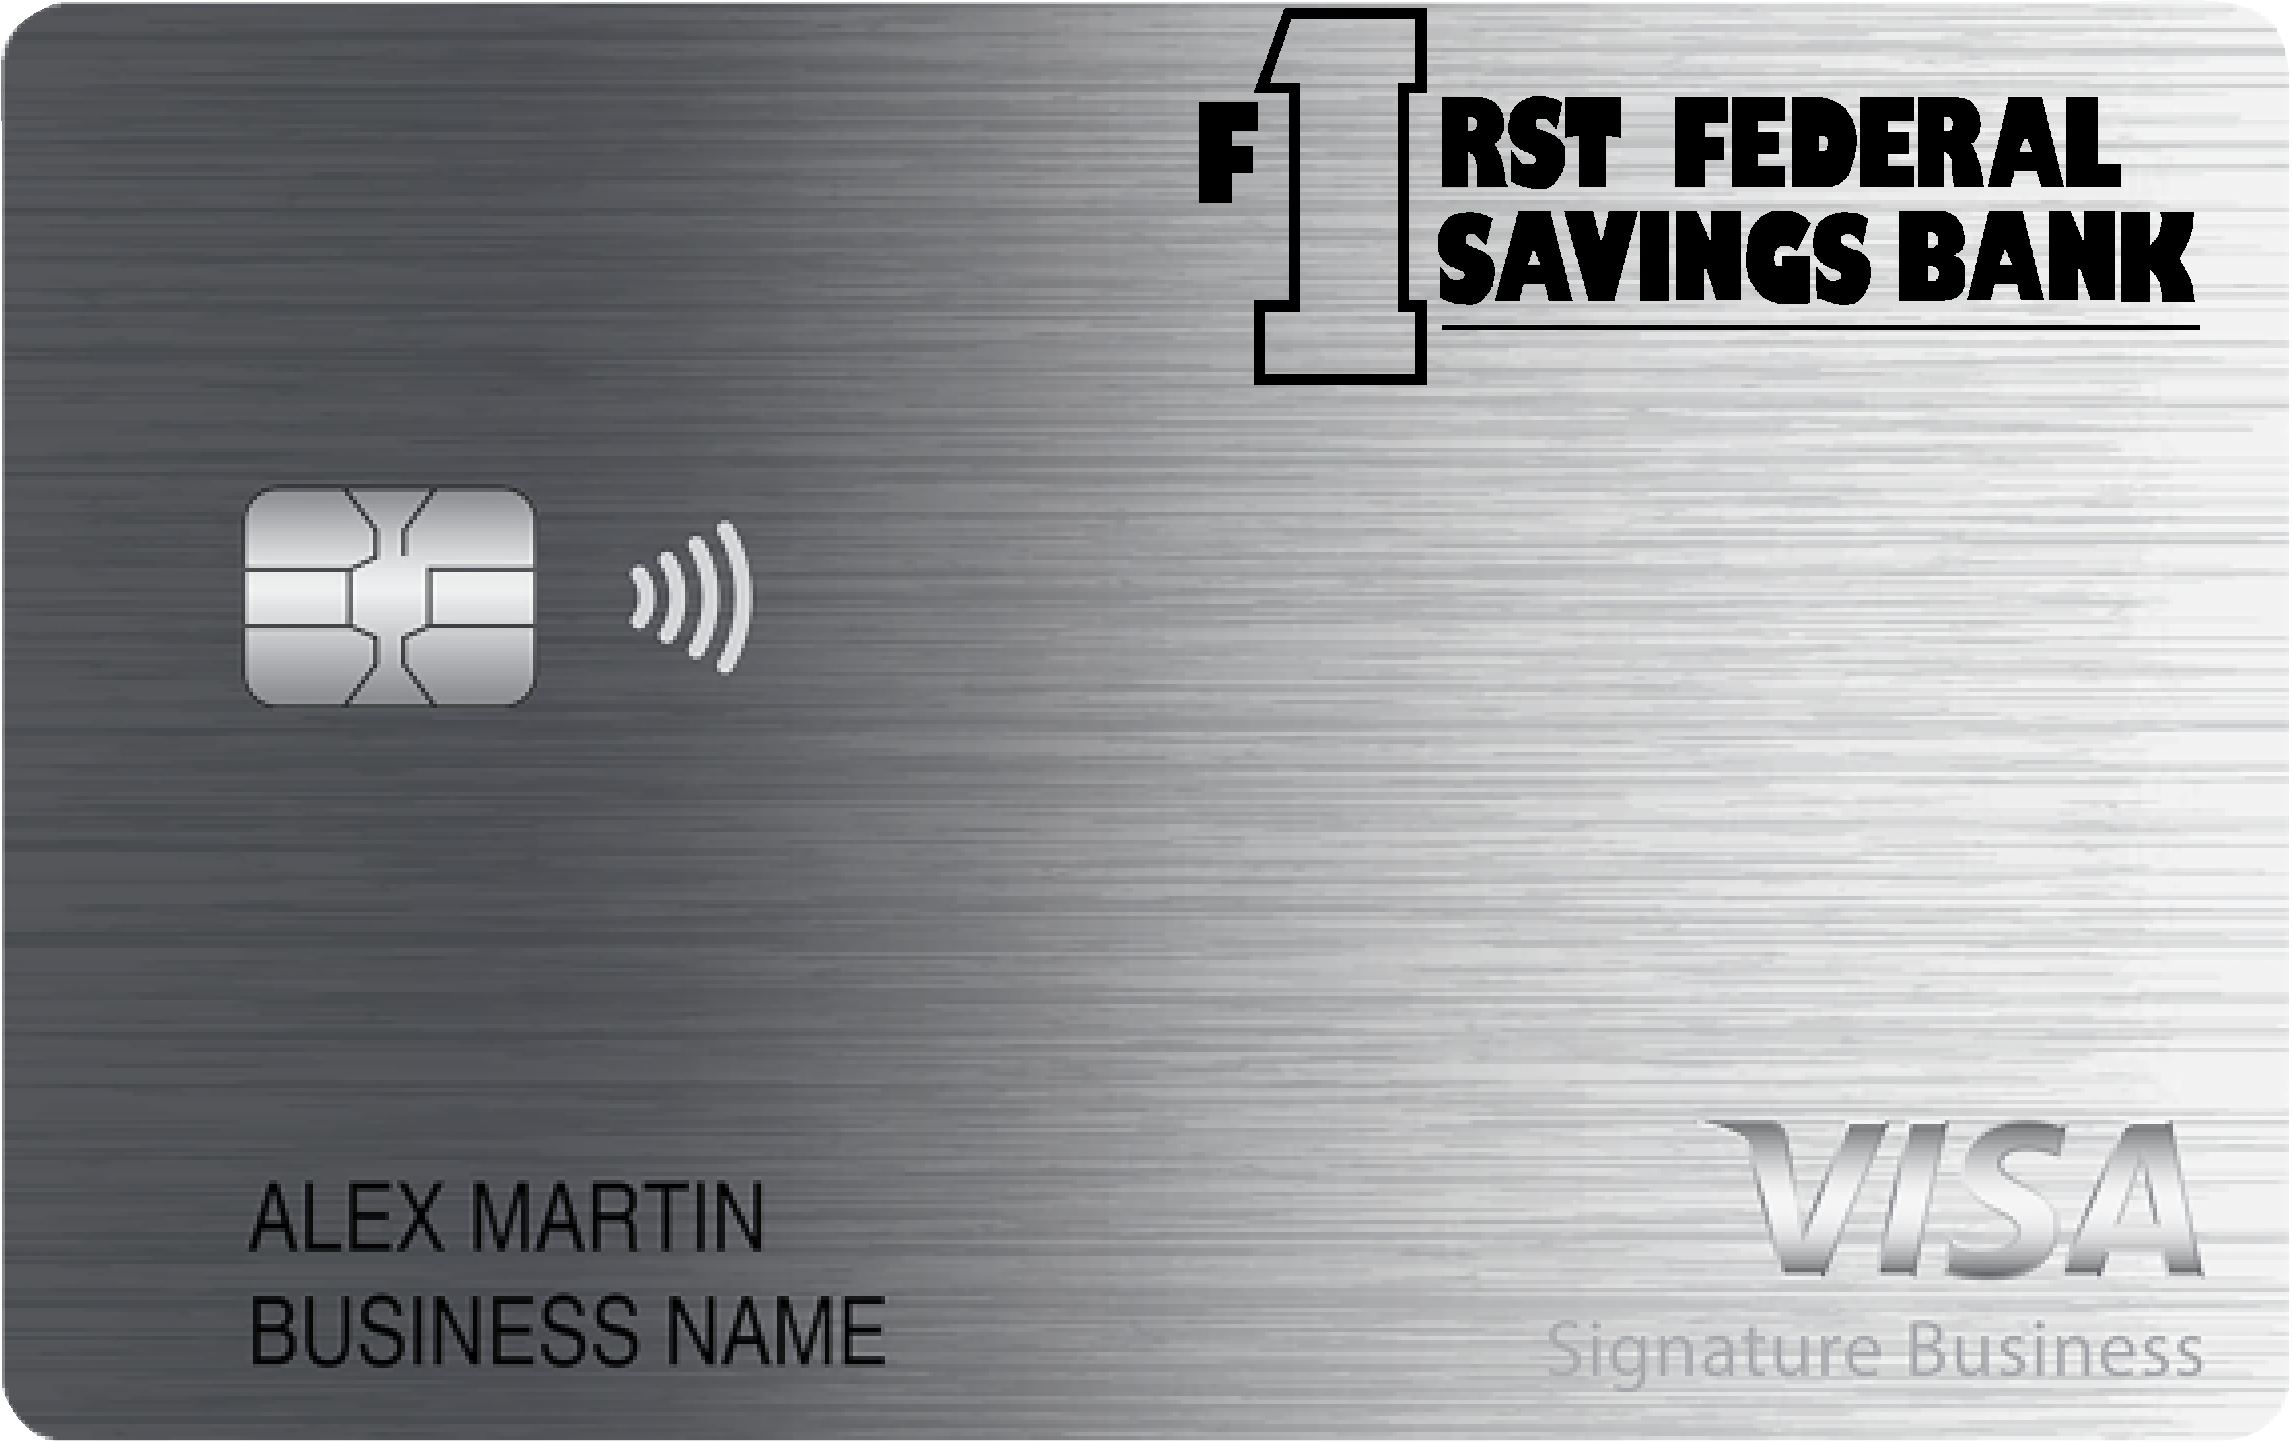 First Federal Savings Bank Smart Business Rewards Card